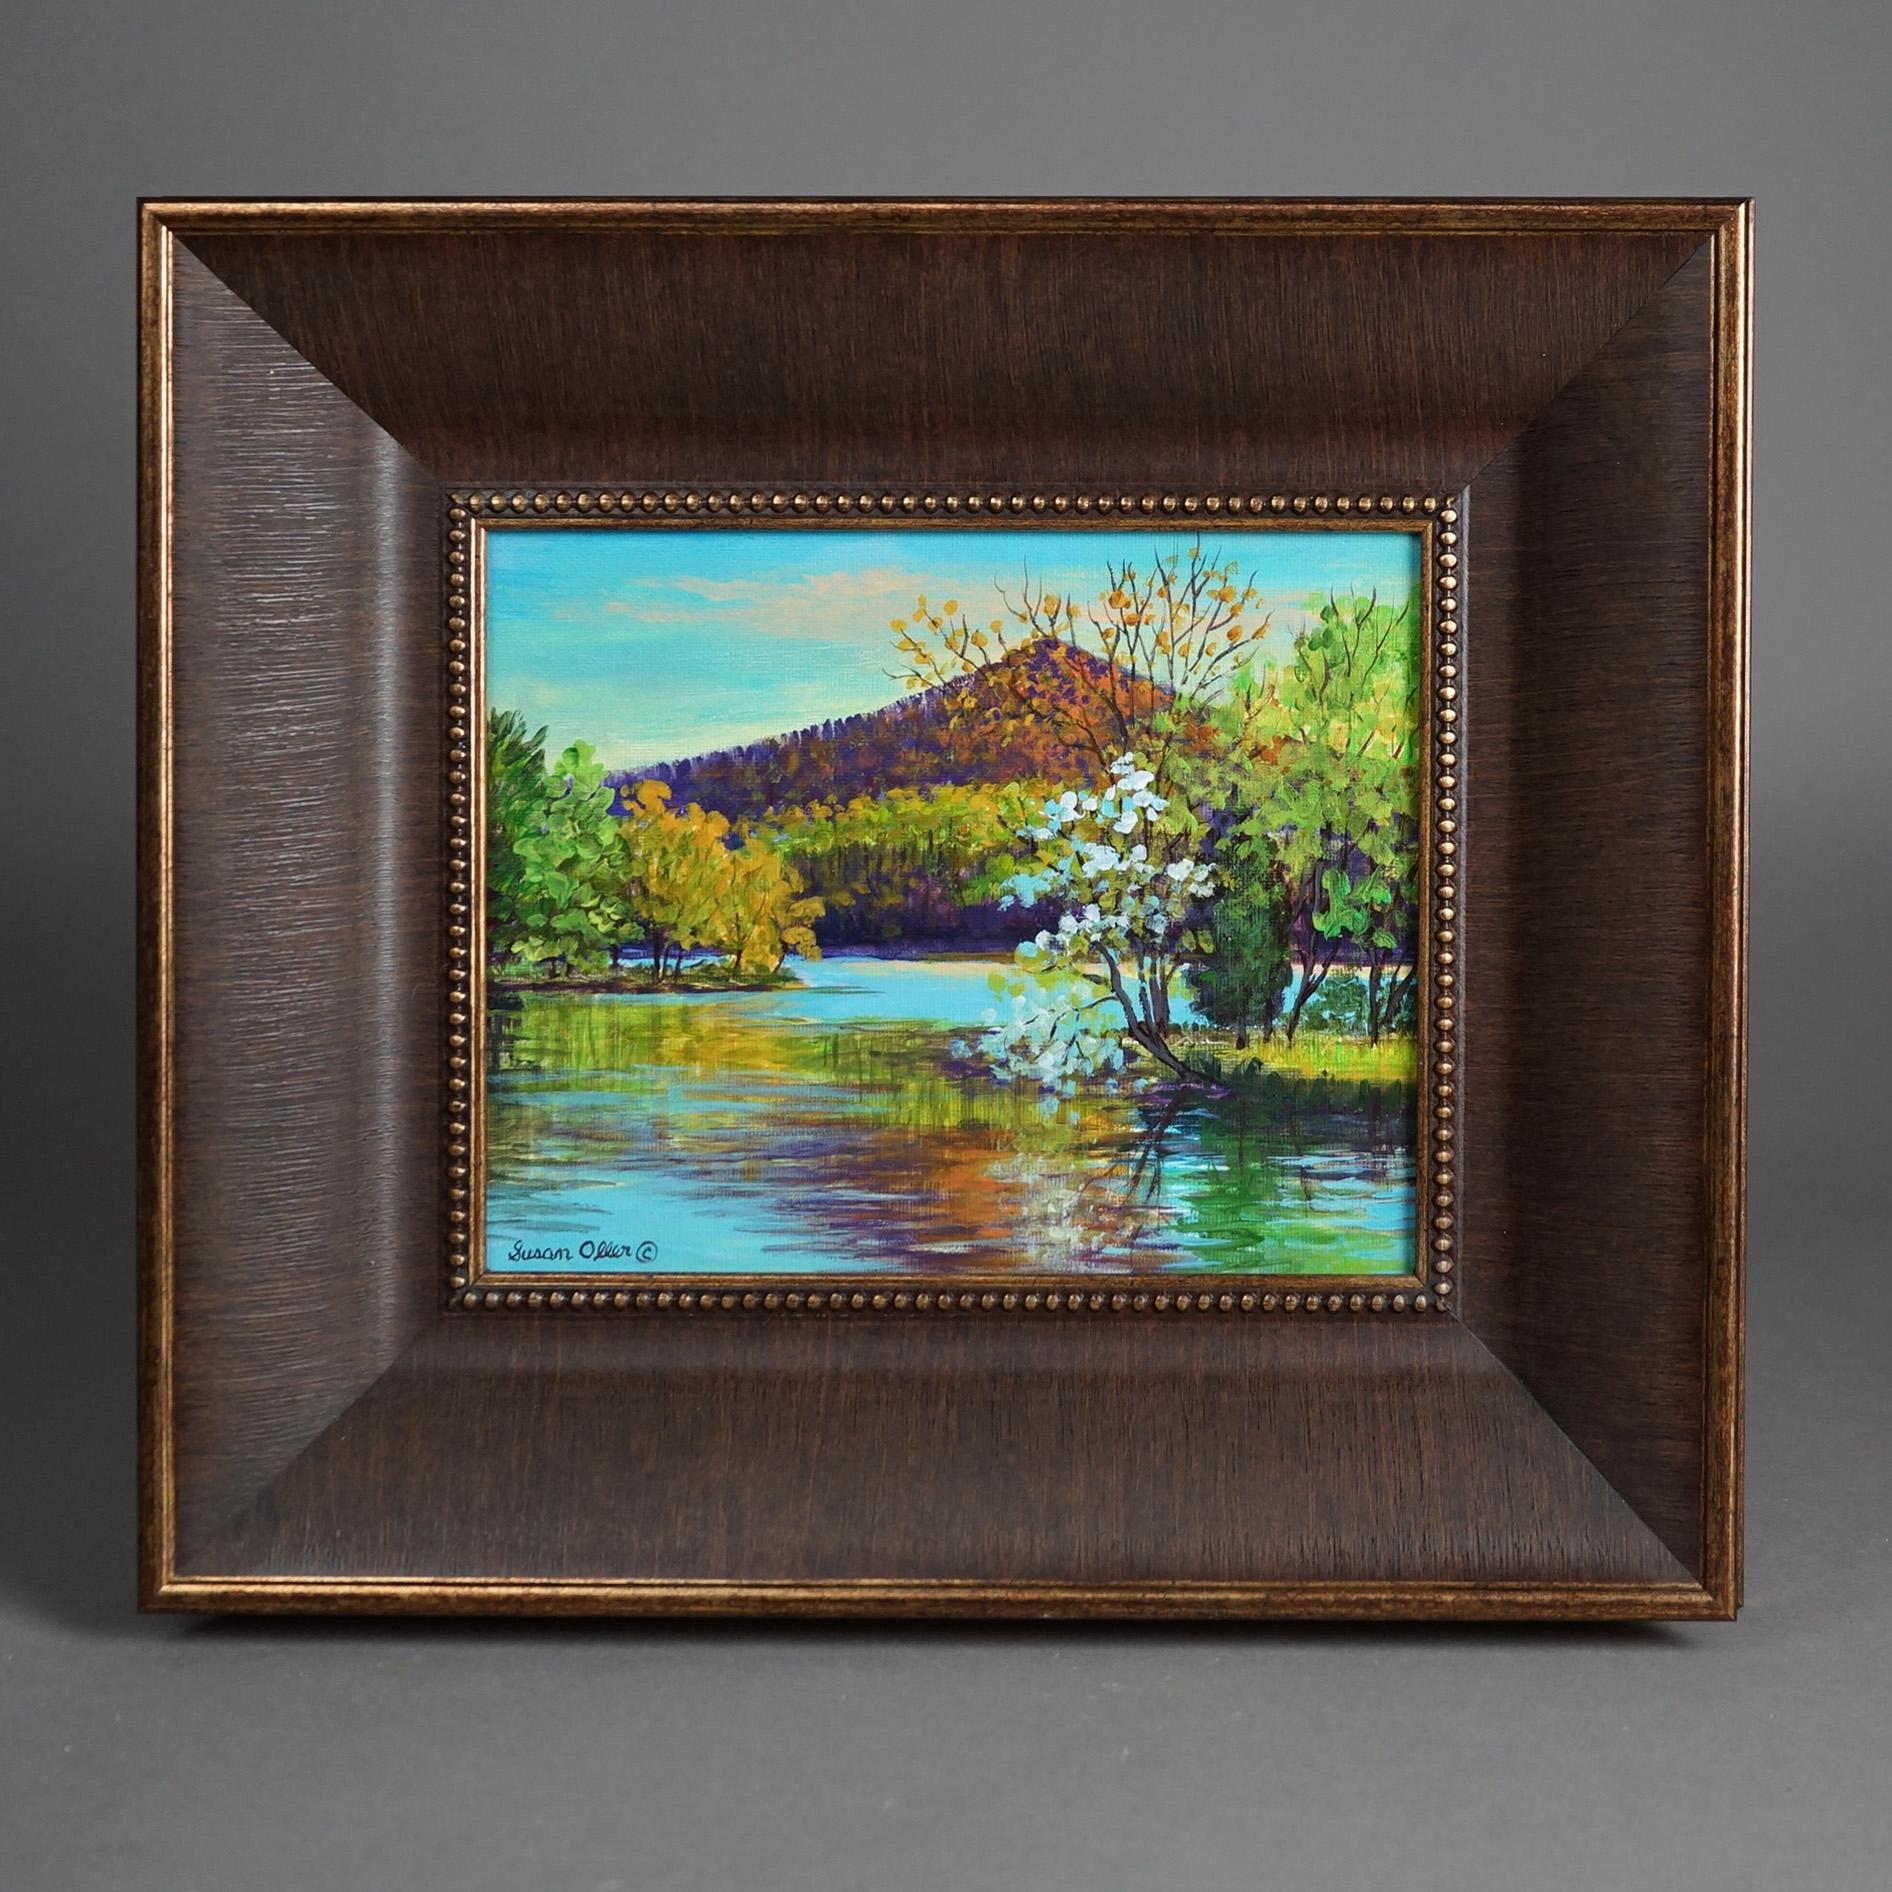 Oil on Panel Landscape Painting, Spring Eve by Susan Oller, Framed, 20th C

Measures - 14